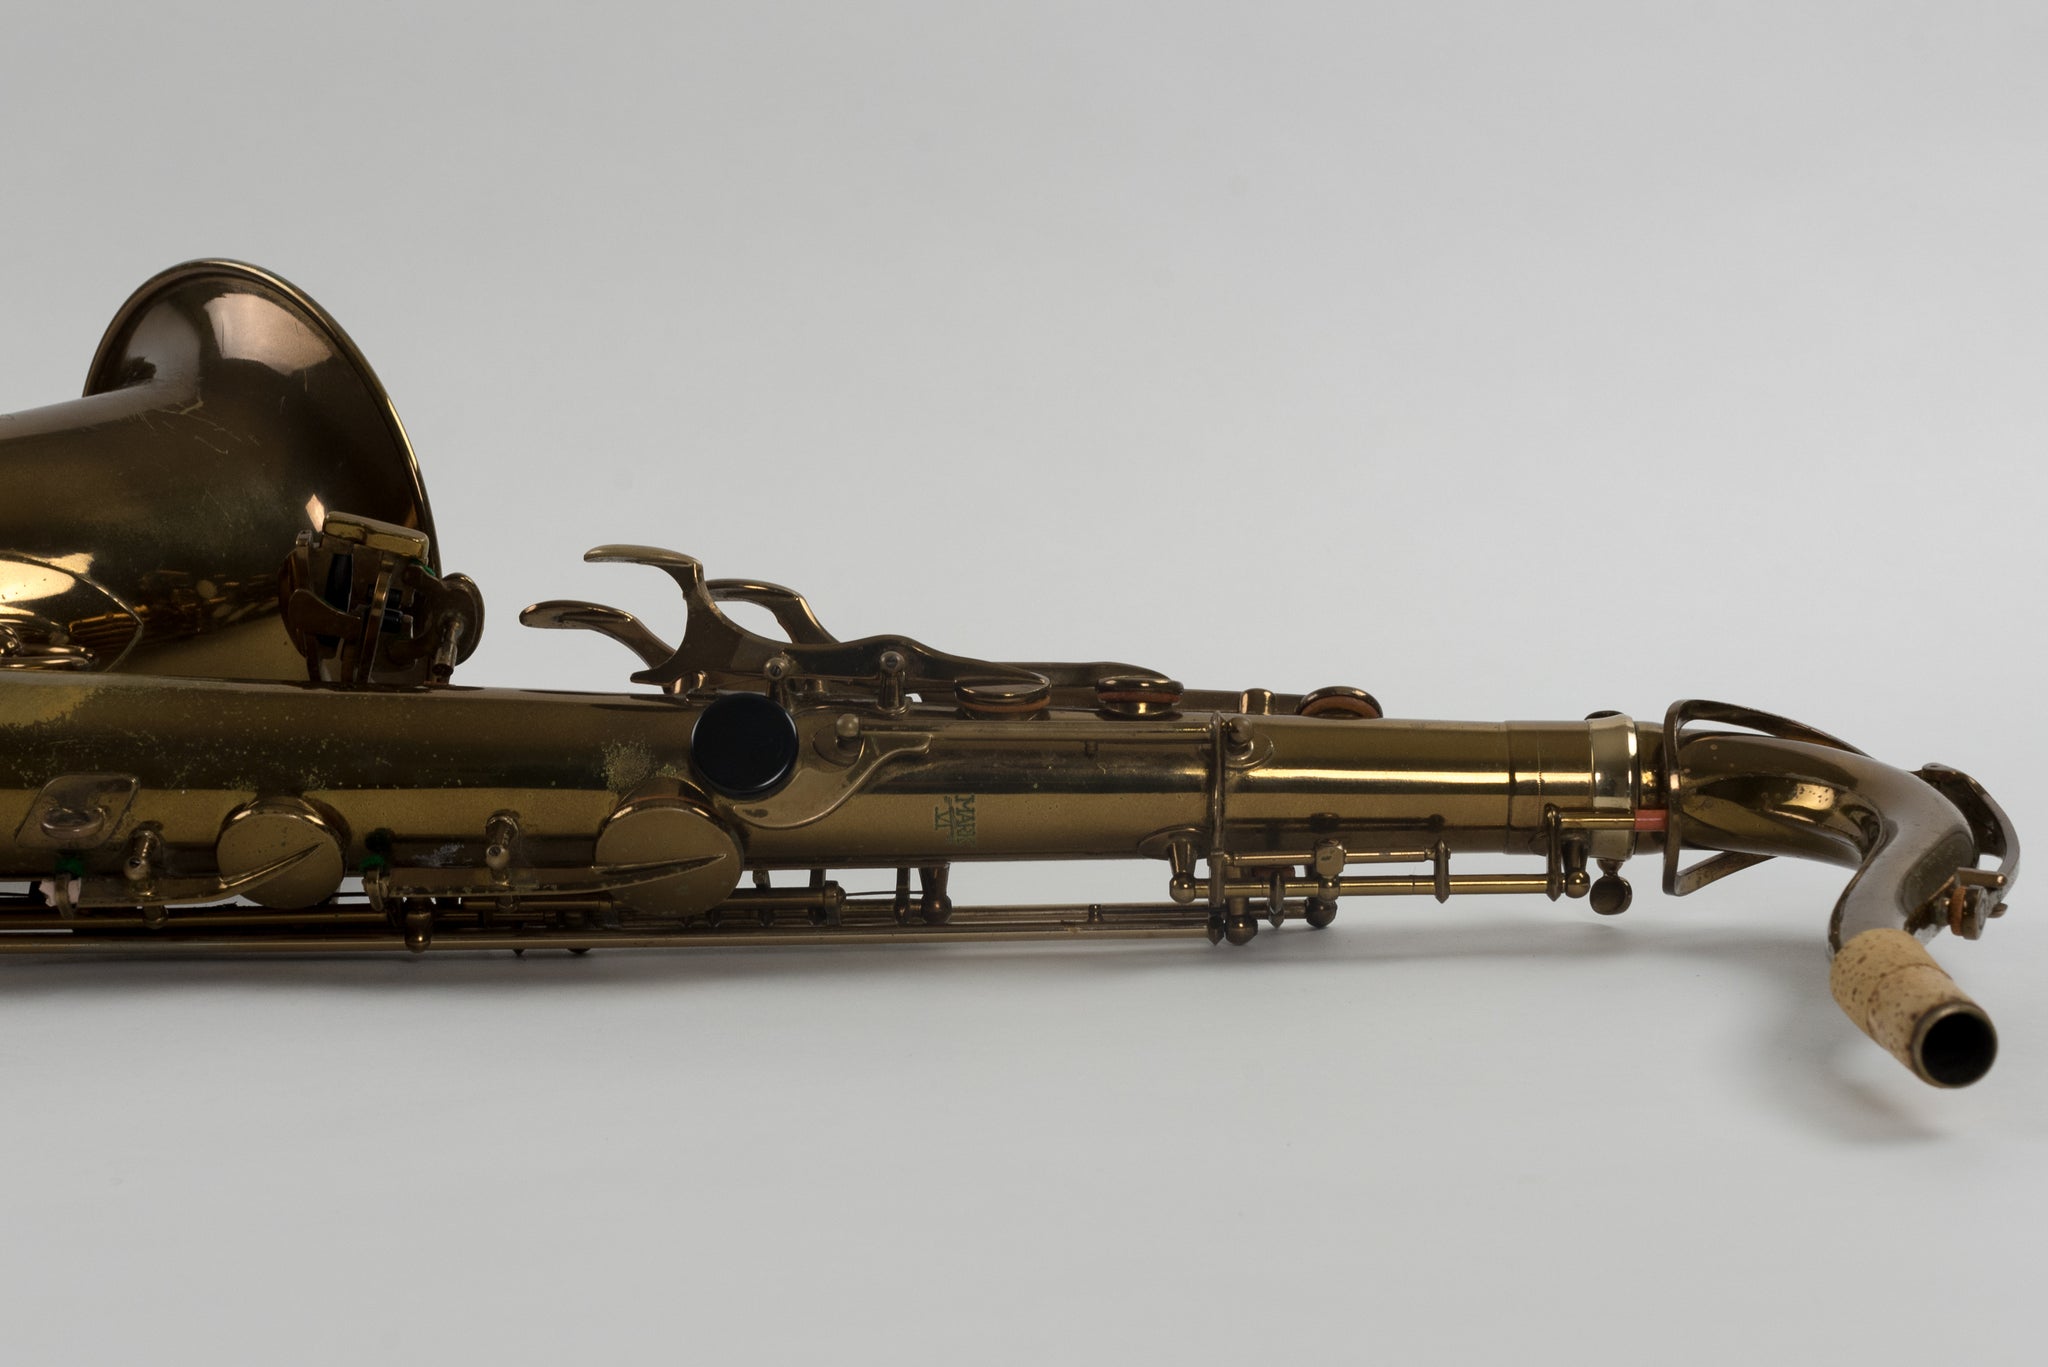 1954 56,xxx Selmer Mark VI Tenor Saxophone, 97% Original Lacquer, WOW!